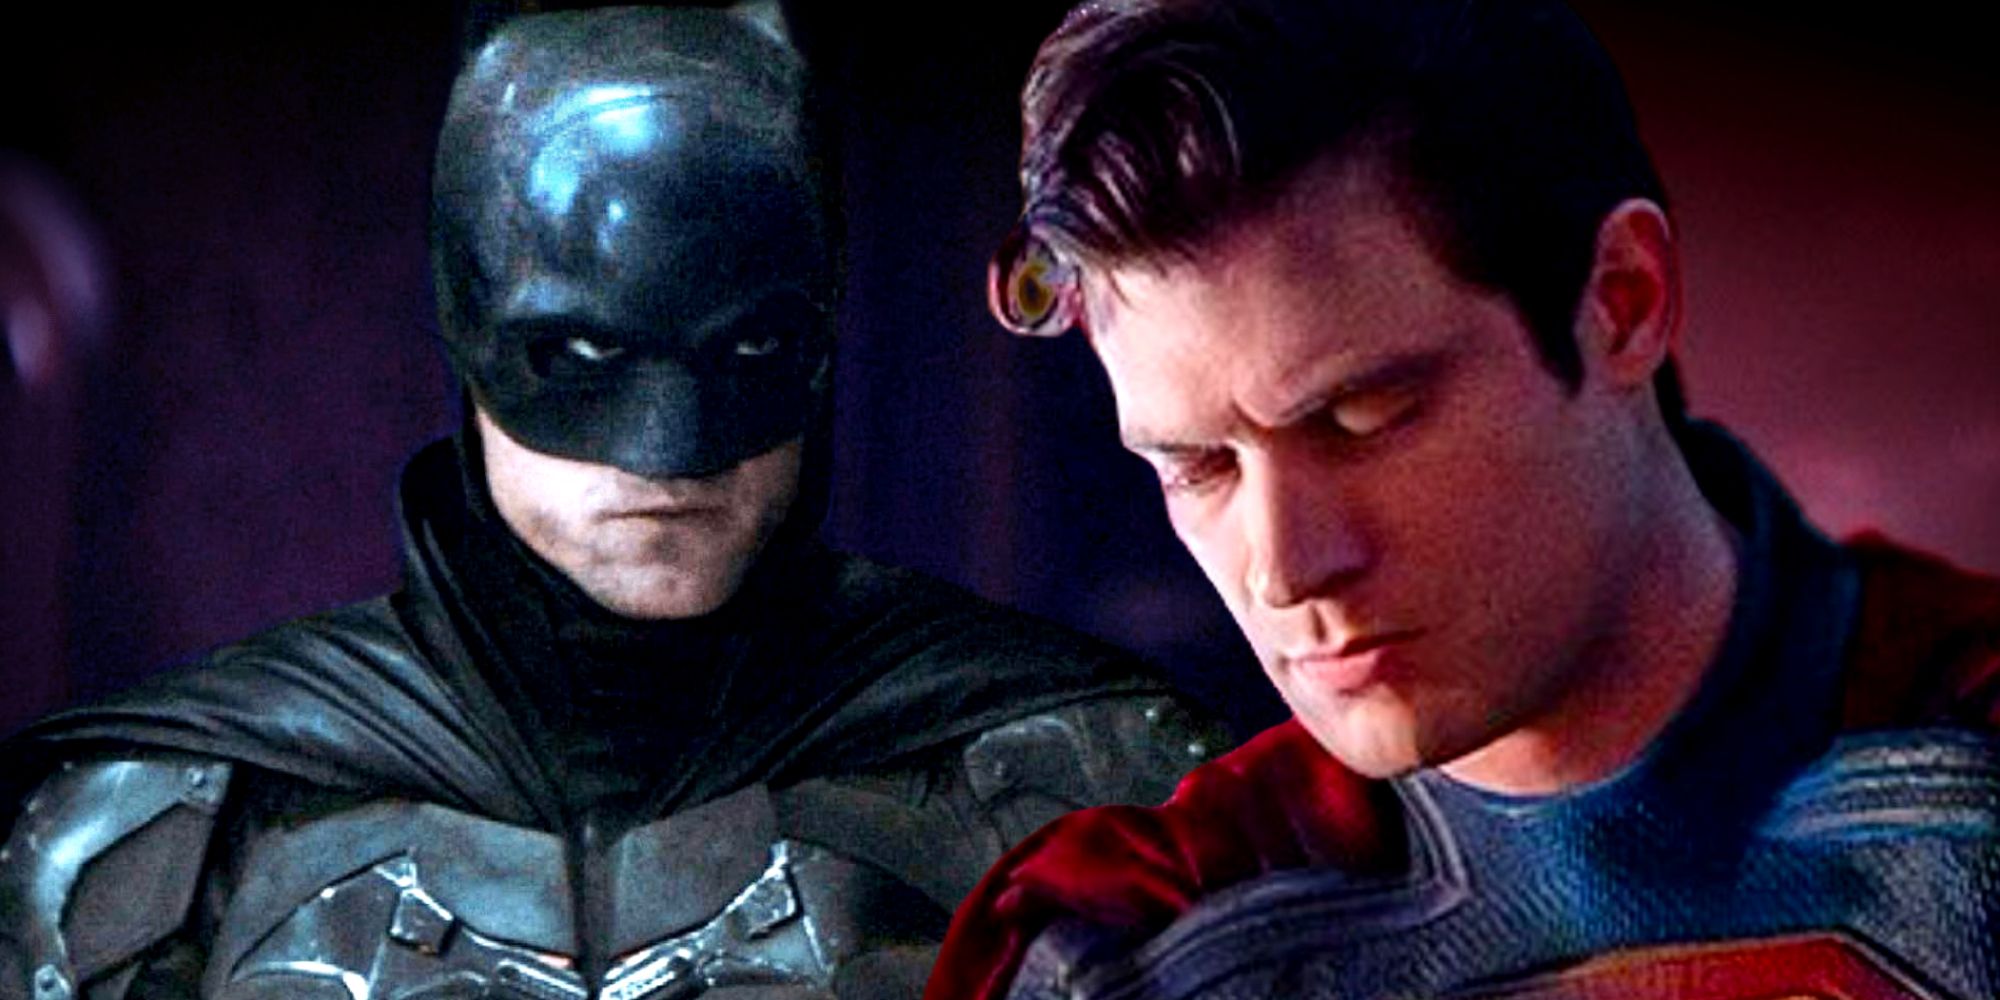 Superman de David Corenswet y Batman de Robert Pattinson se unen en una increíble obra de arte de DC